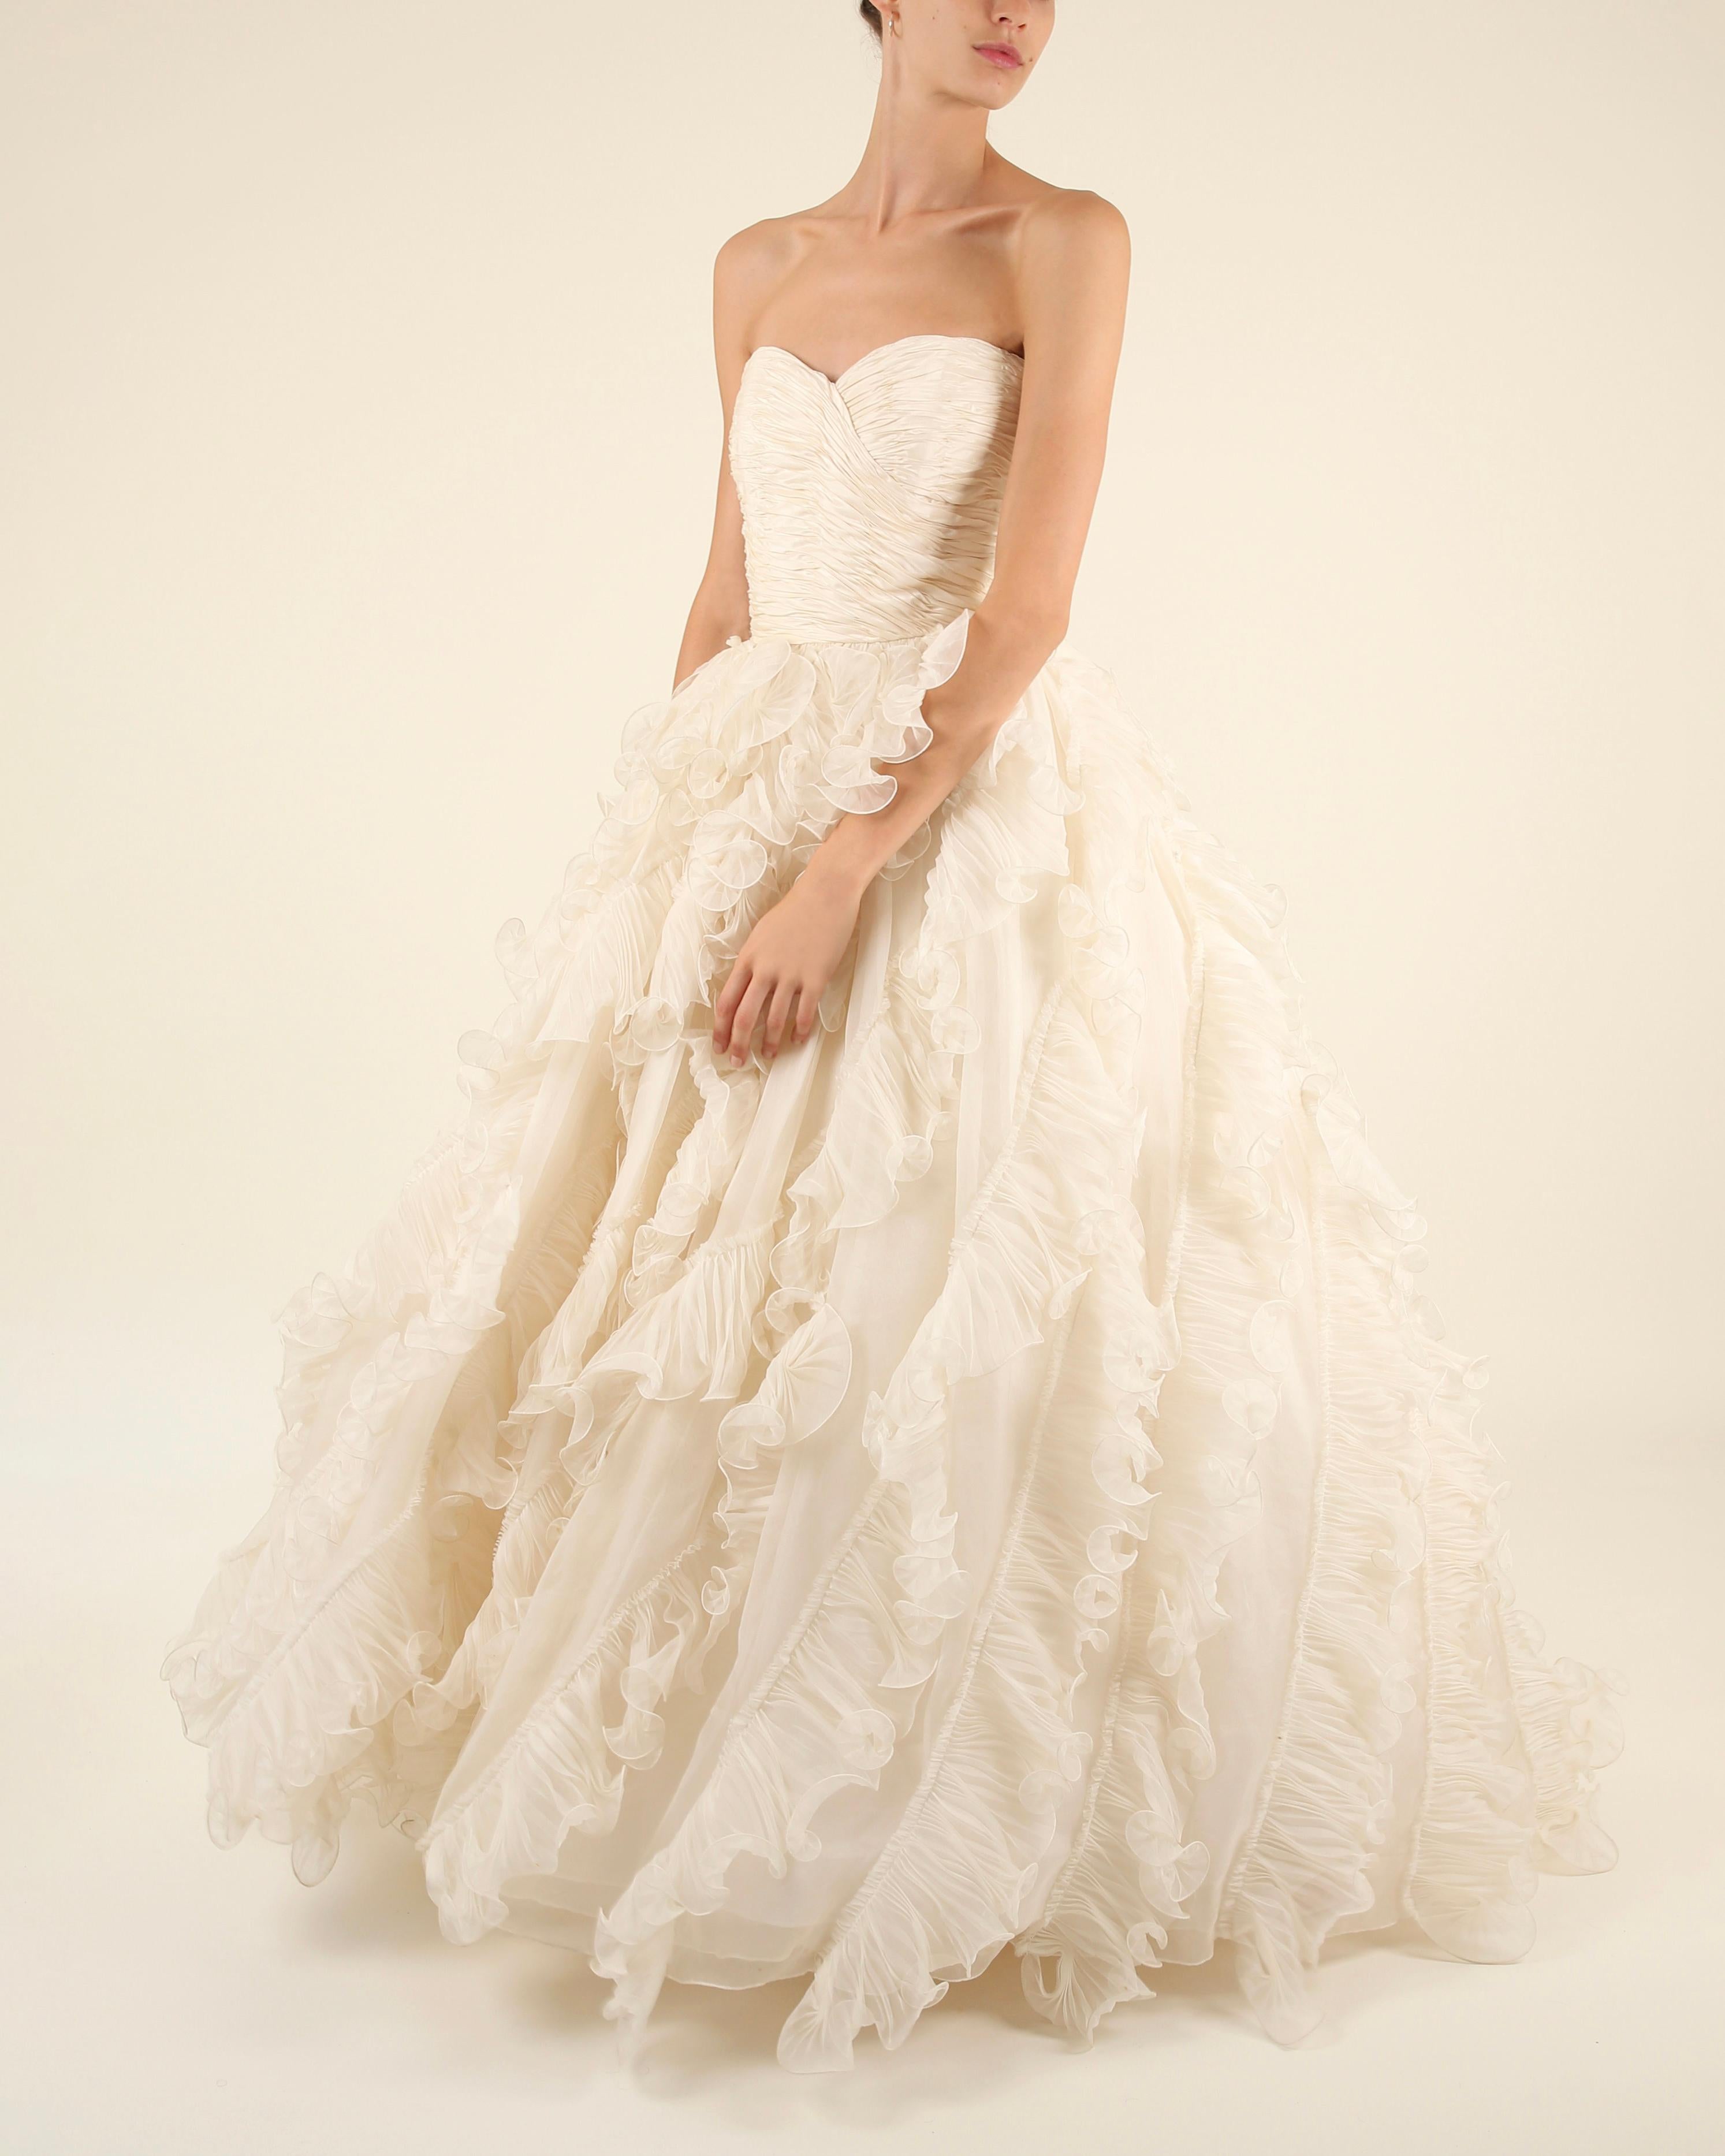 Women's Oscar de la Renta S/S08 bridal ivory strapless vintage ruffle wedding dress gown For Sale